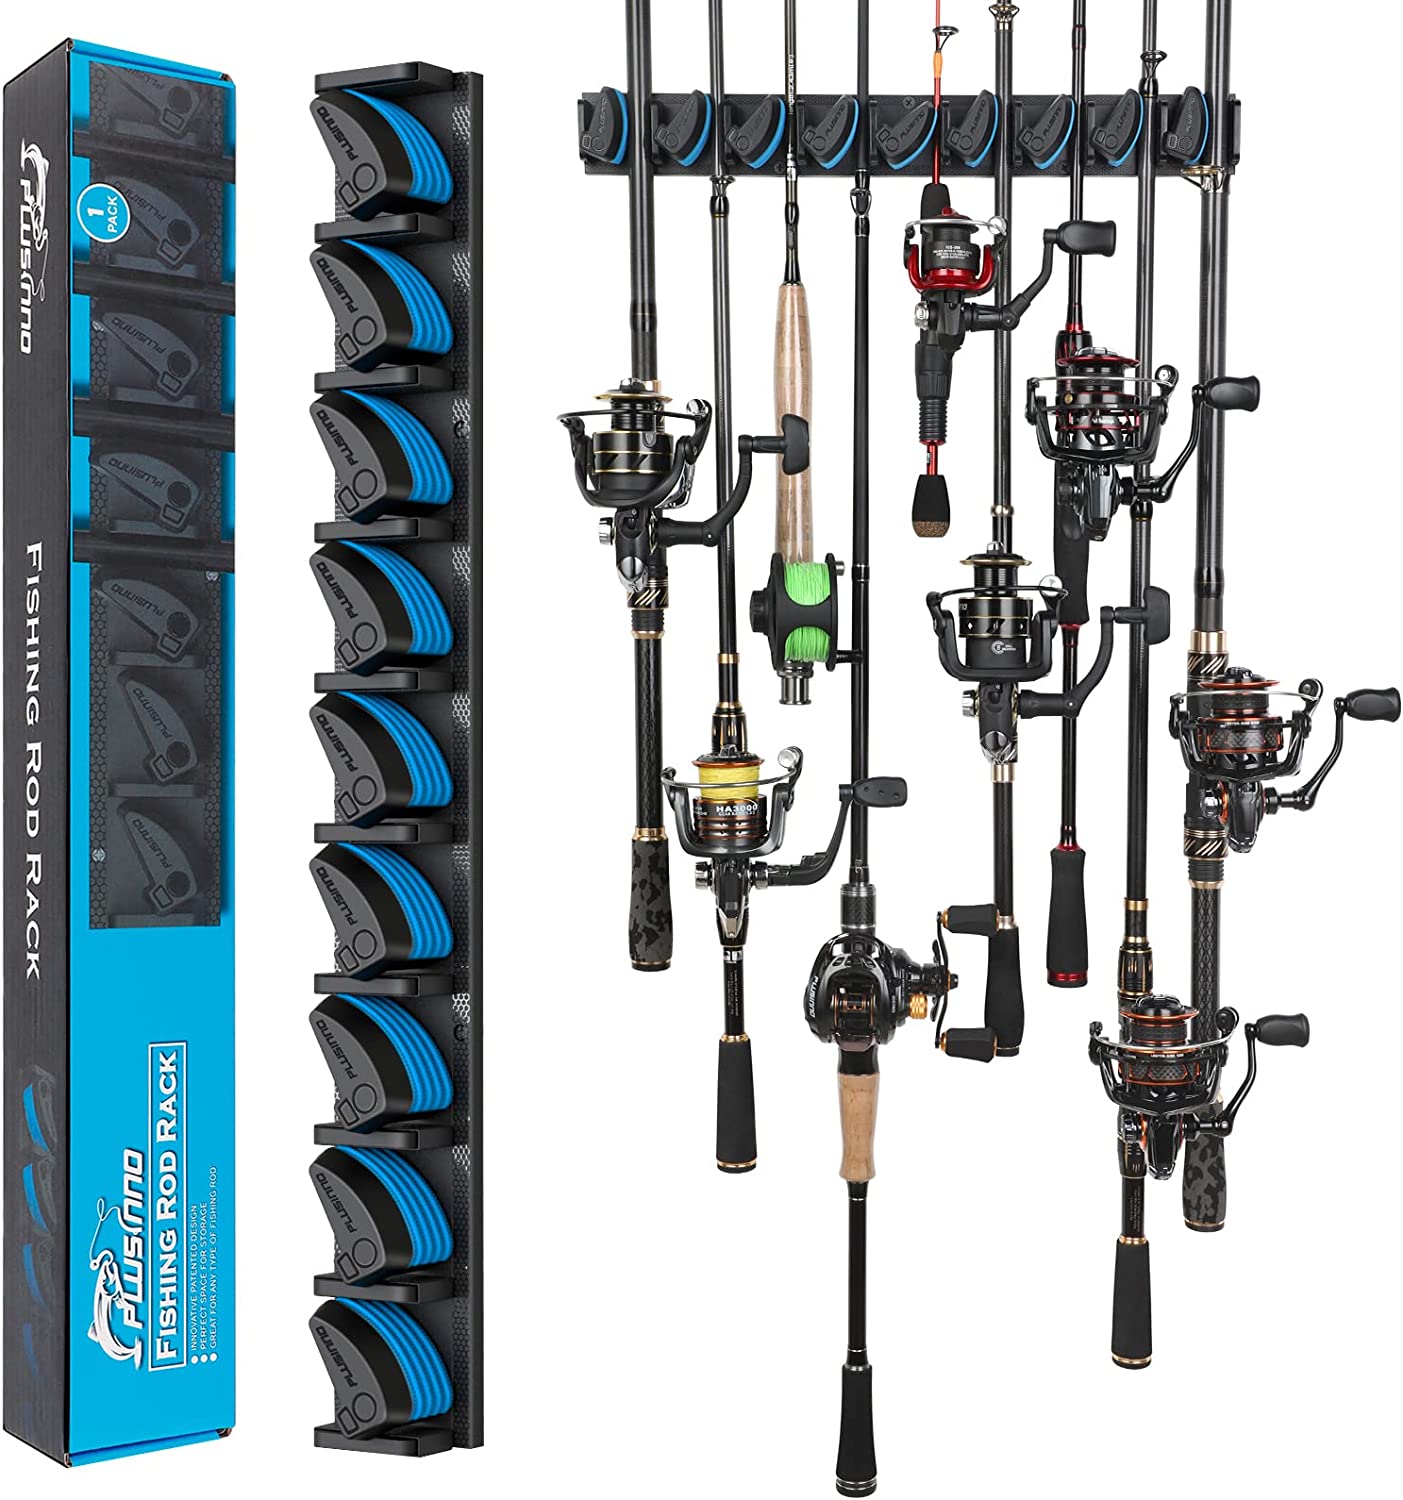  INOOMP Extendable Trident Fishing Rod Holders 4pcs